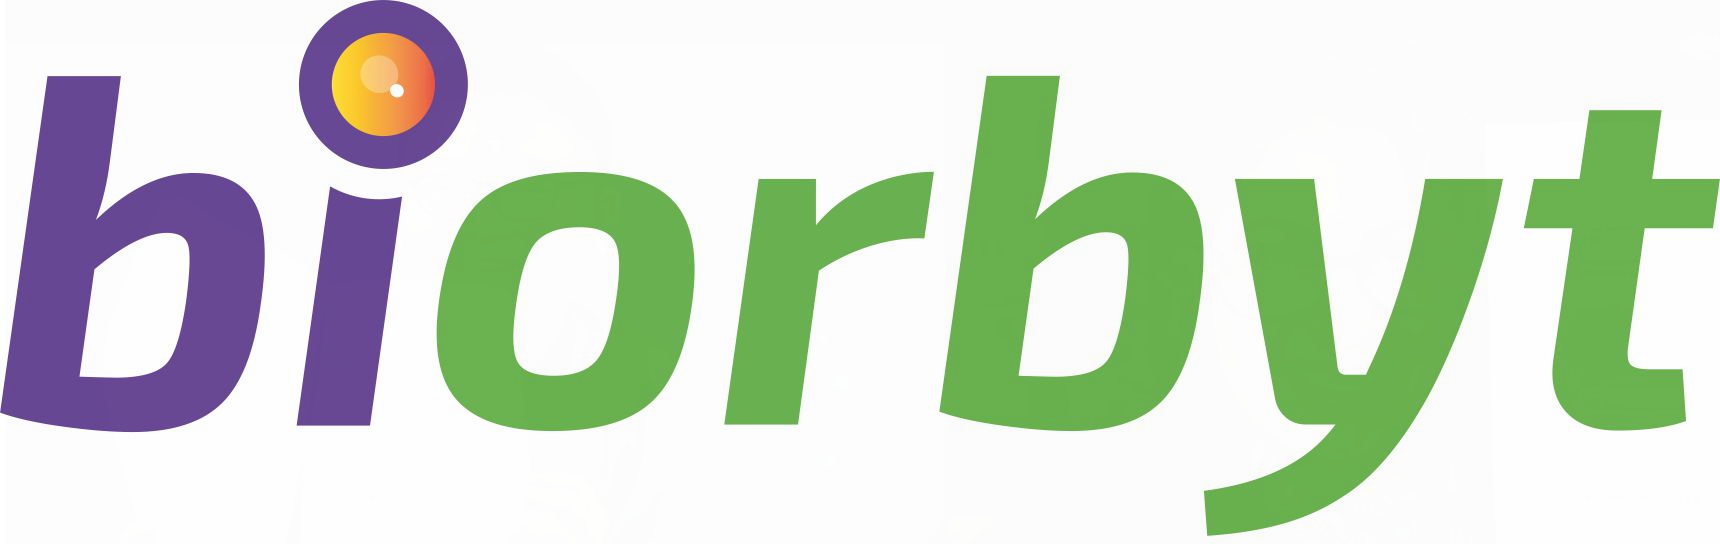 biorbyt-high-res-logo-enweghị strapline